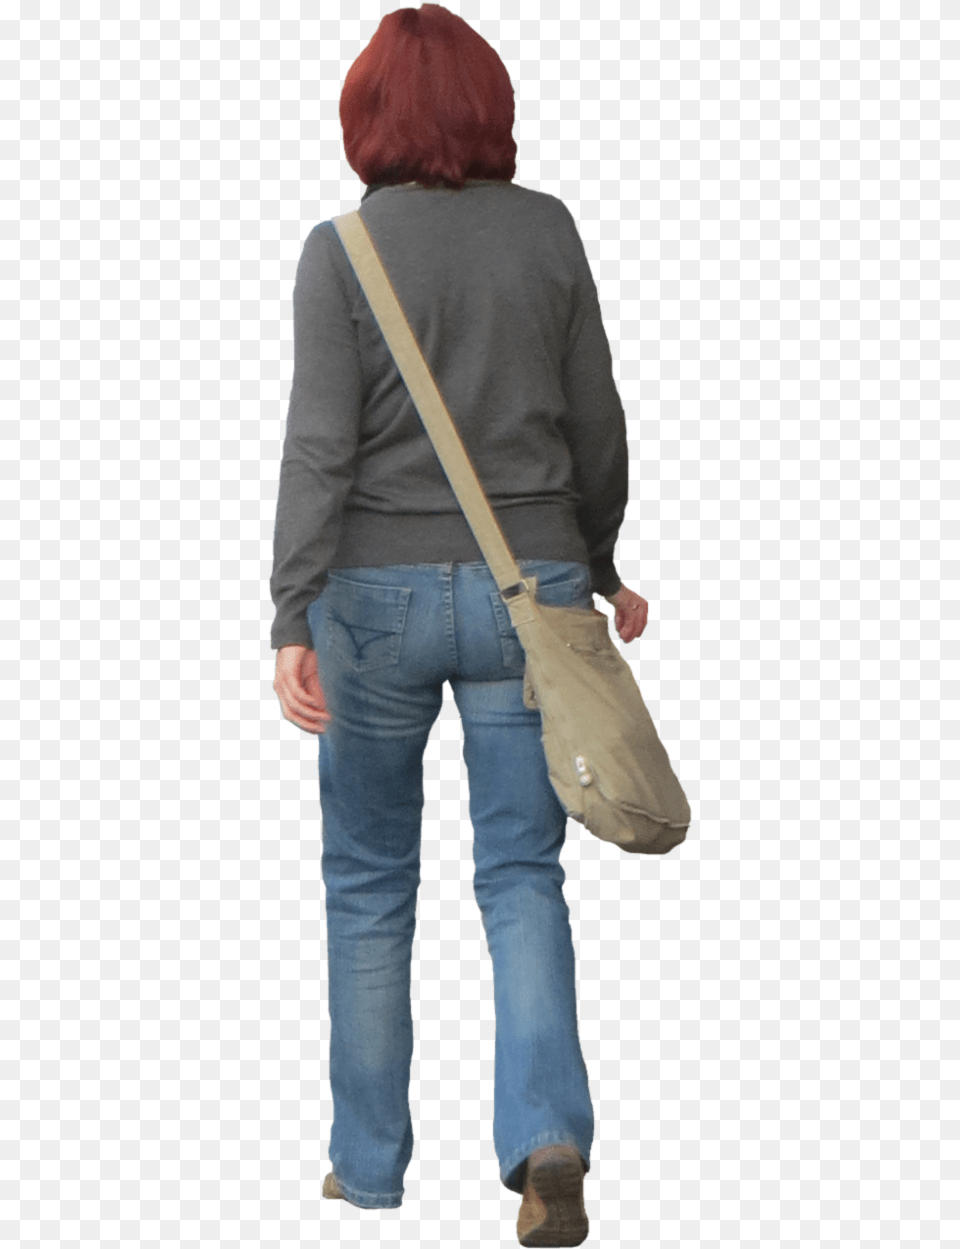 People Walking Back 1 Image Woman Walking Away, Clothing, Pants, Jeans, Adult Png